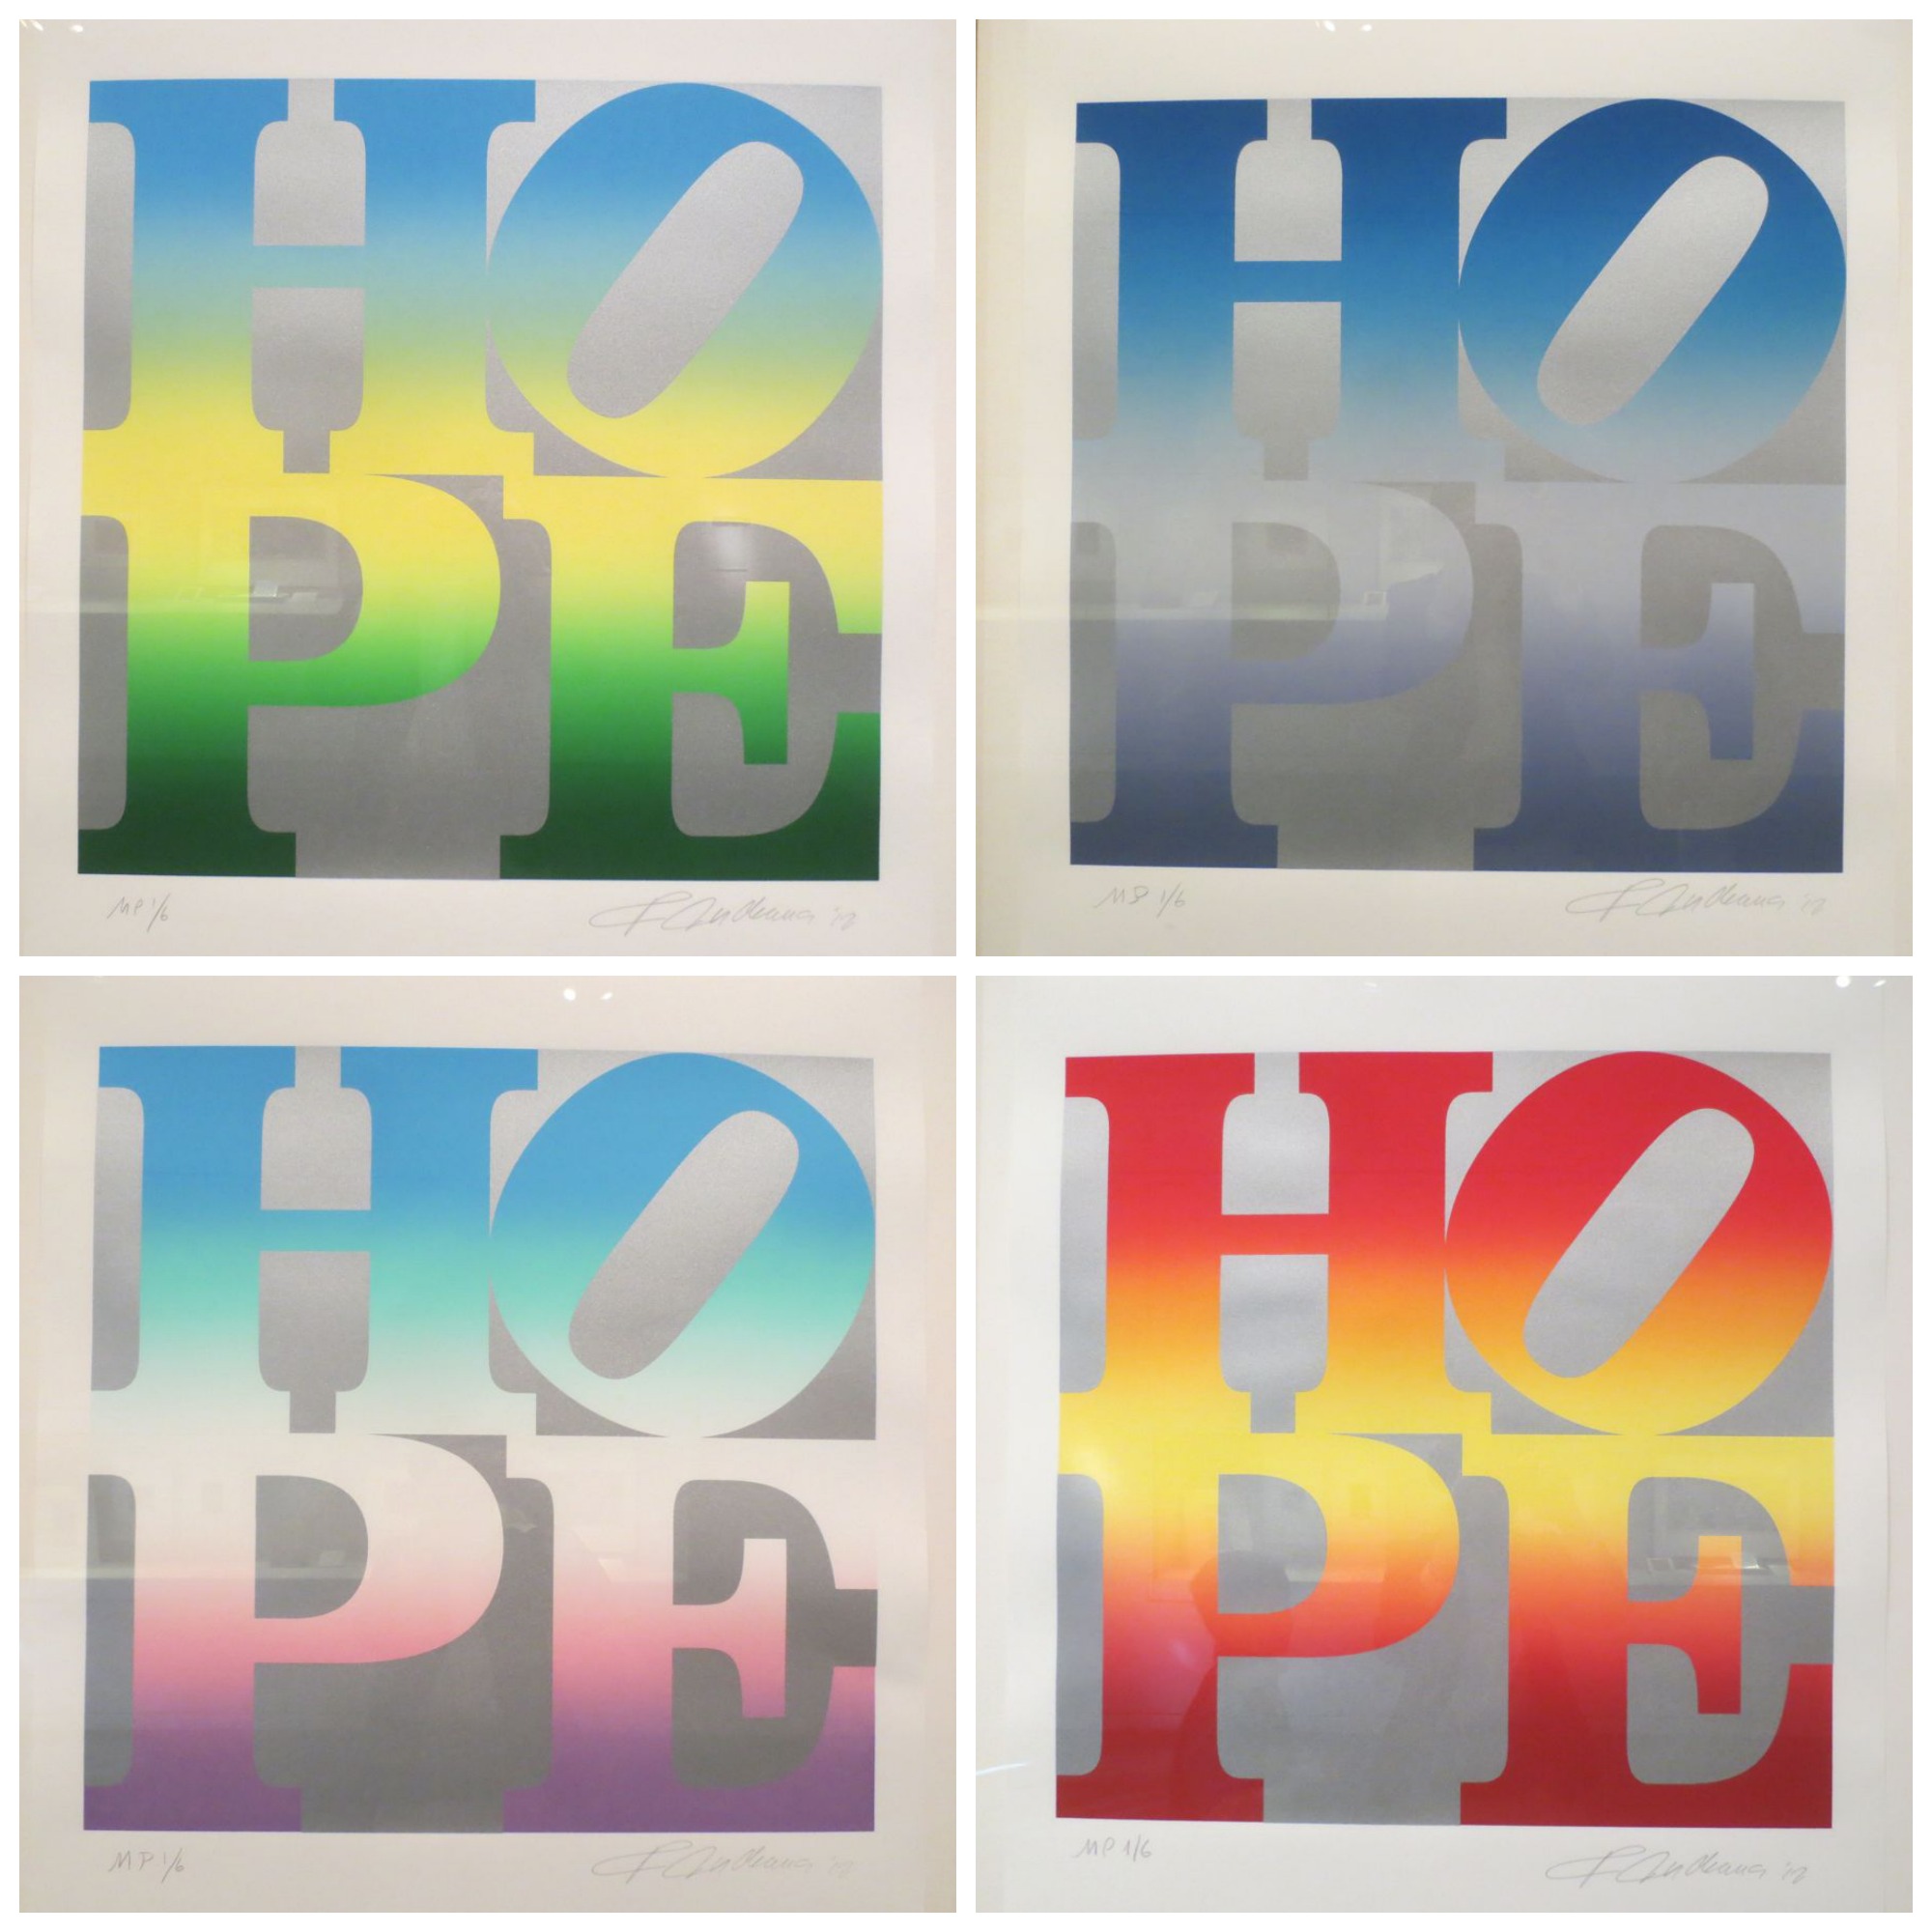 "HOPE" prints by Robert Indiana at the McNay Art Museum | San Antonio Charter Moms